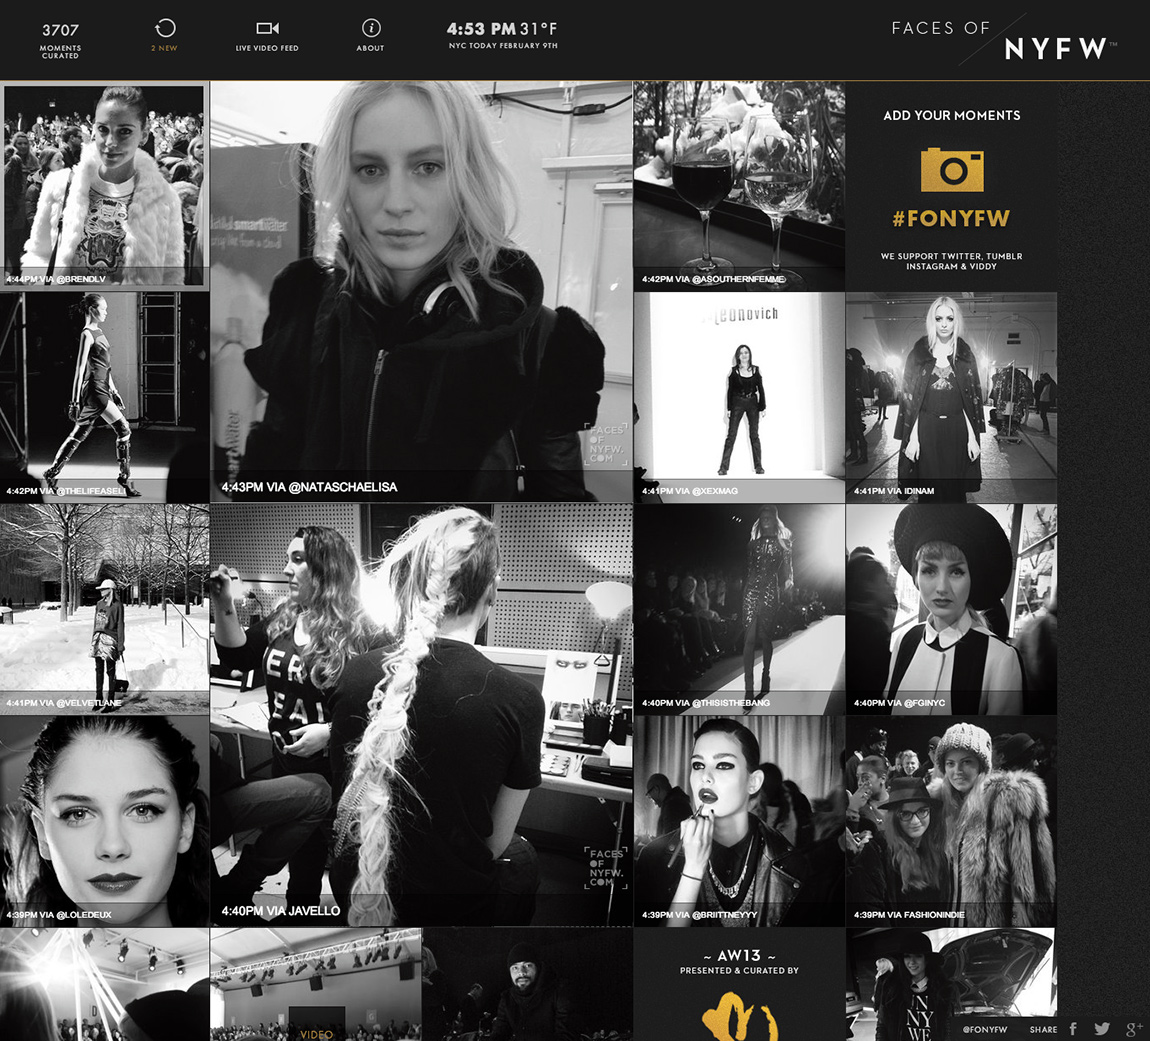 Faces of NYFW Website Screenshot